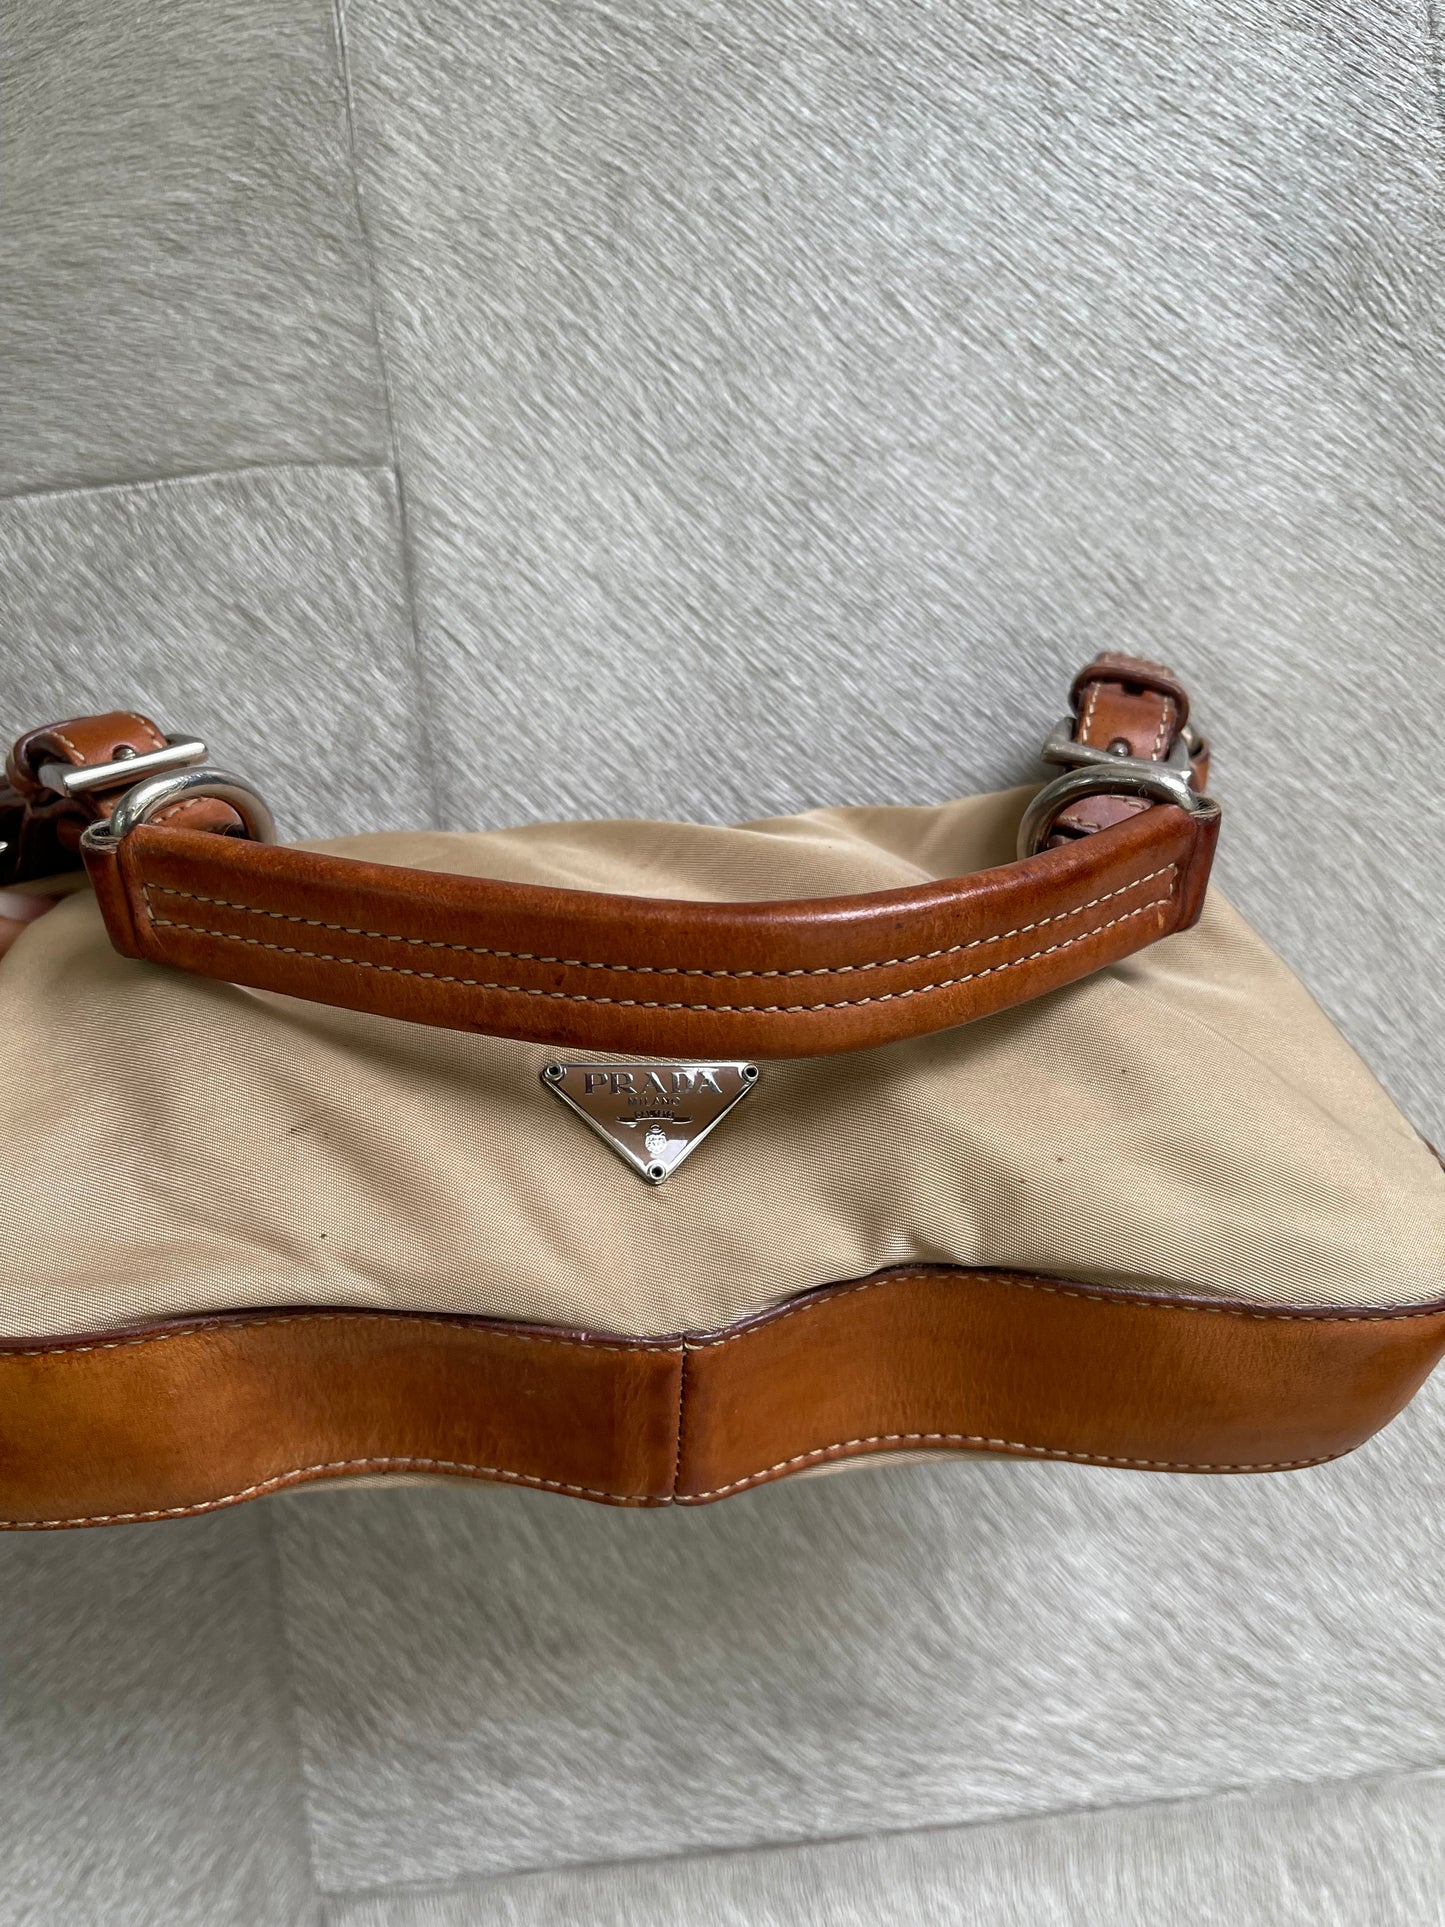 Prada vintage re edition mini shoulder bag